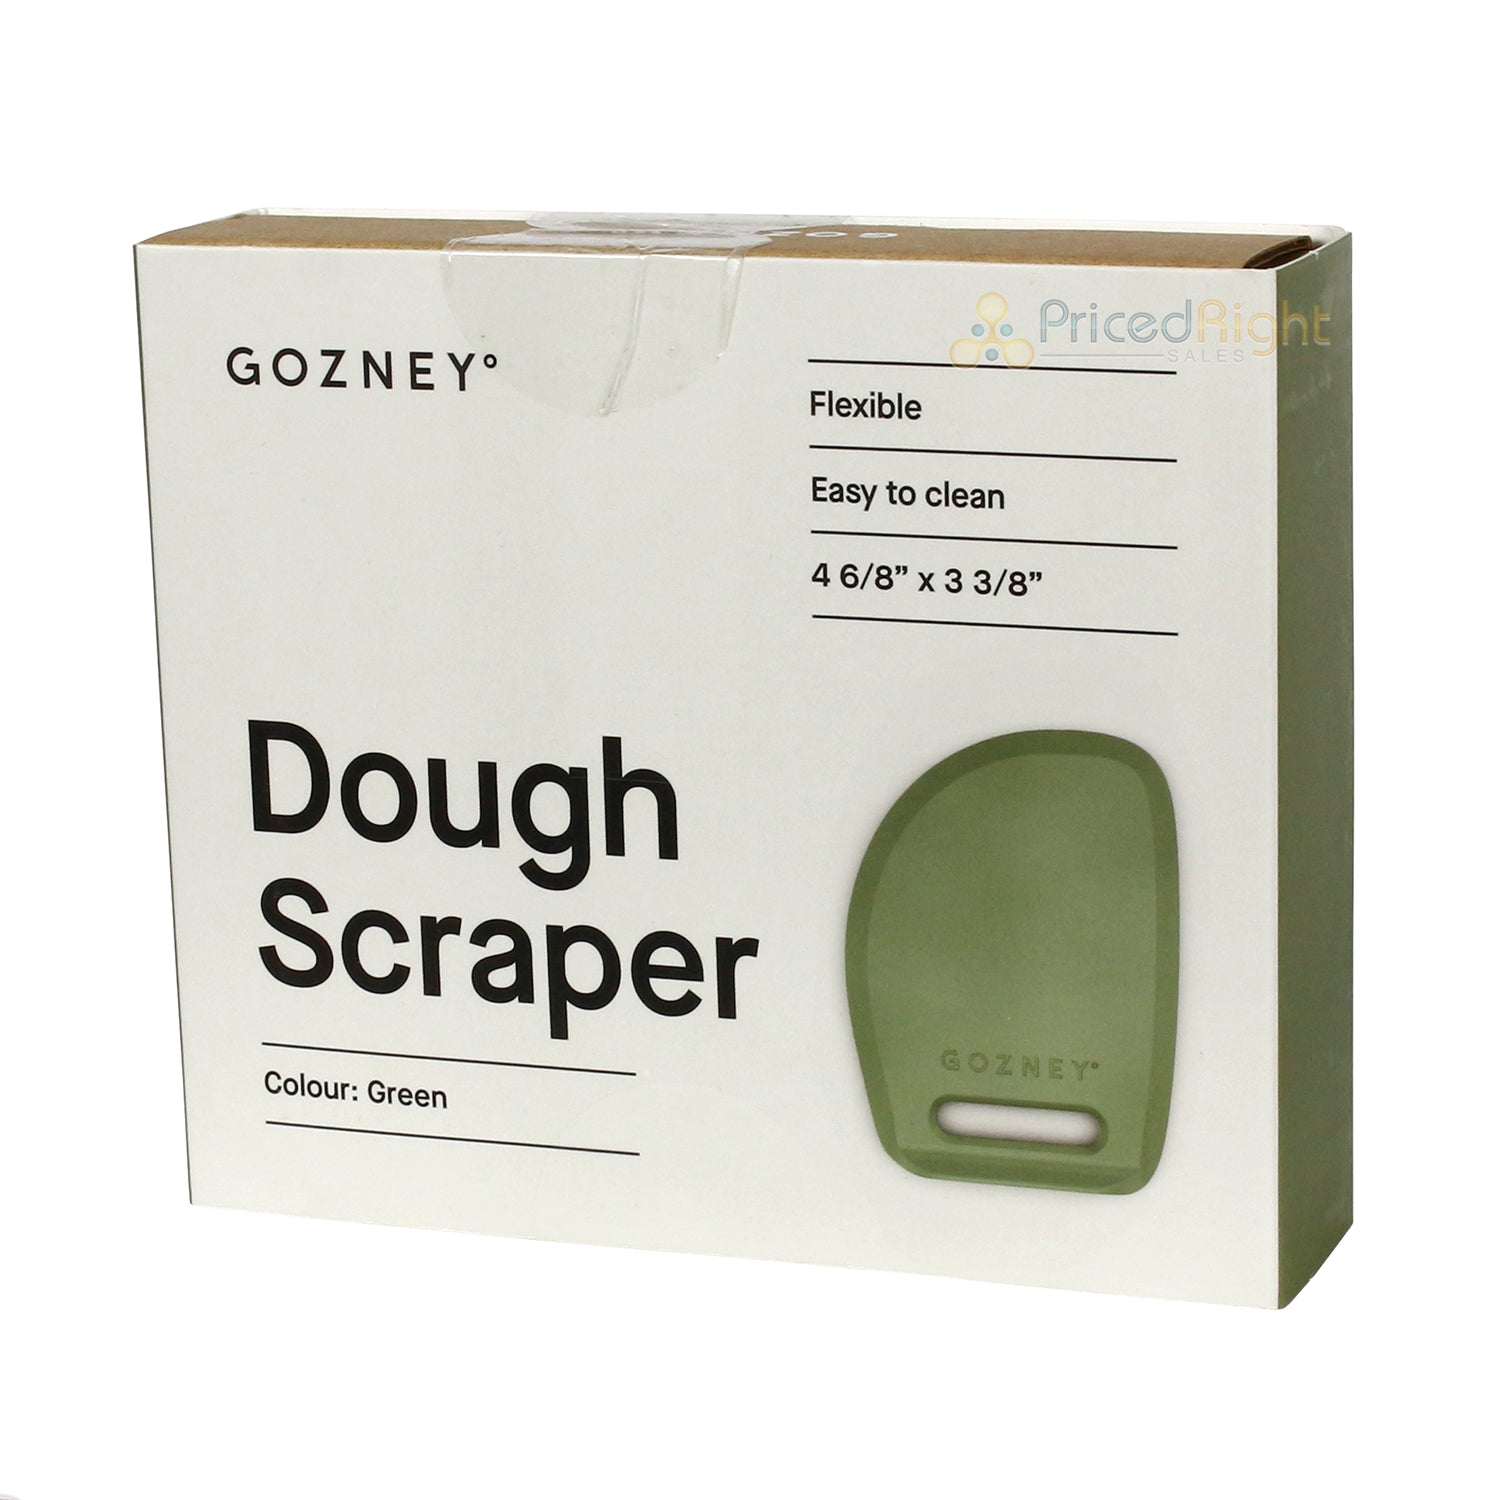 Gozney Dough Scraper. Silicon & Stainless Steel.